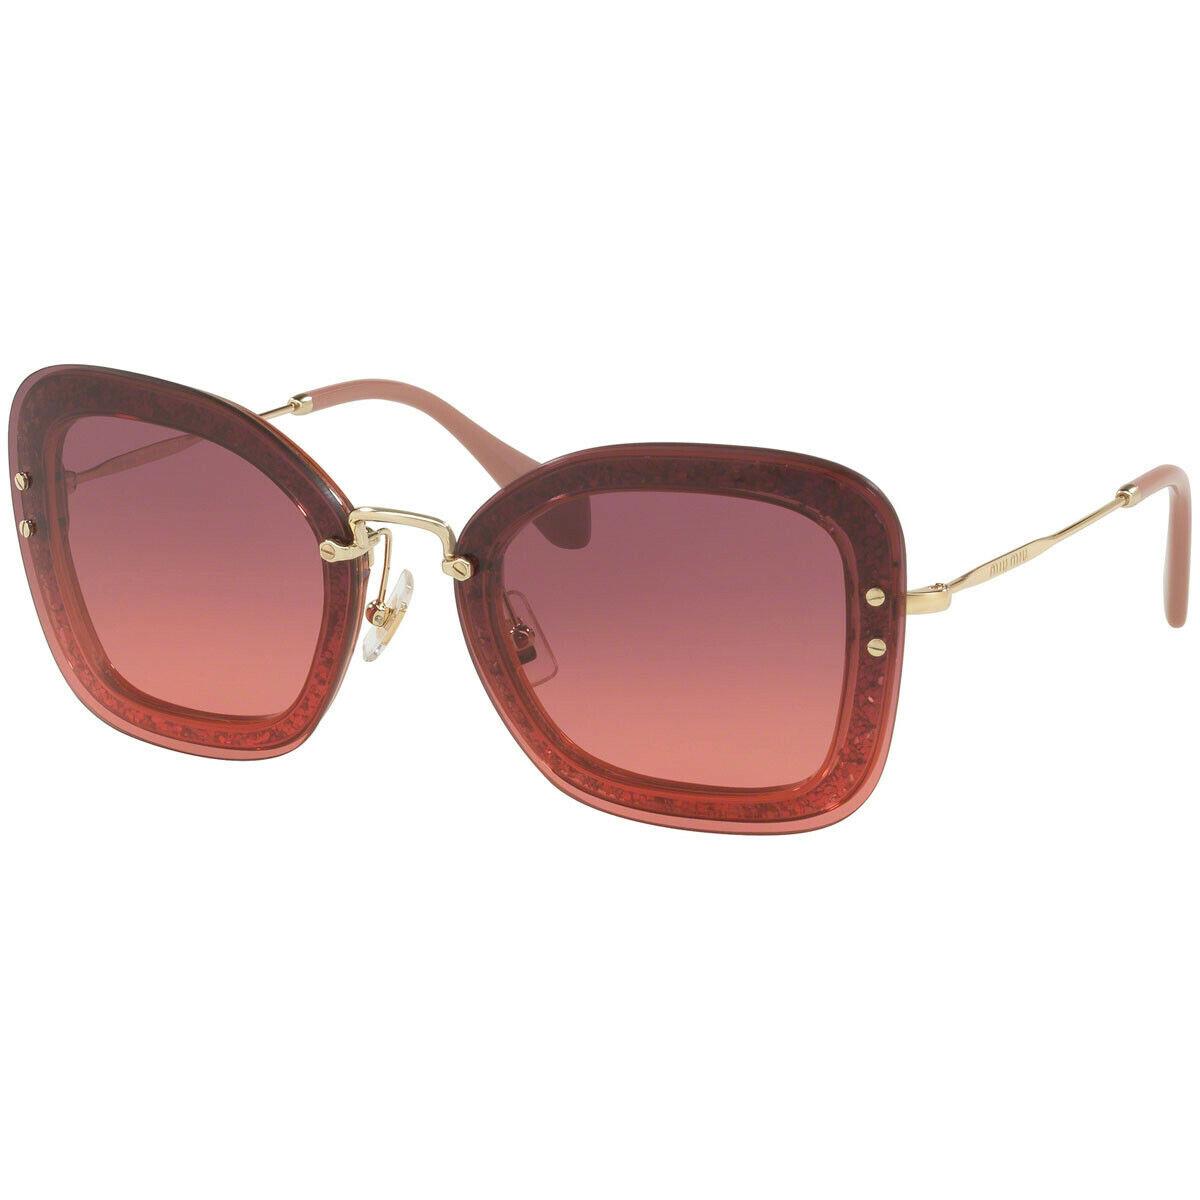 Miu Miu Reveal Evolution MU02TS Gold Raspberry Pink Mirrored Sunglasses